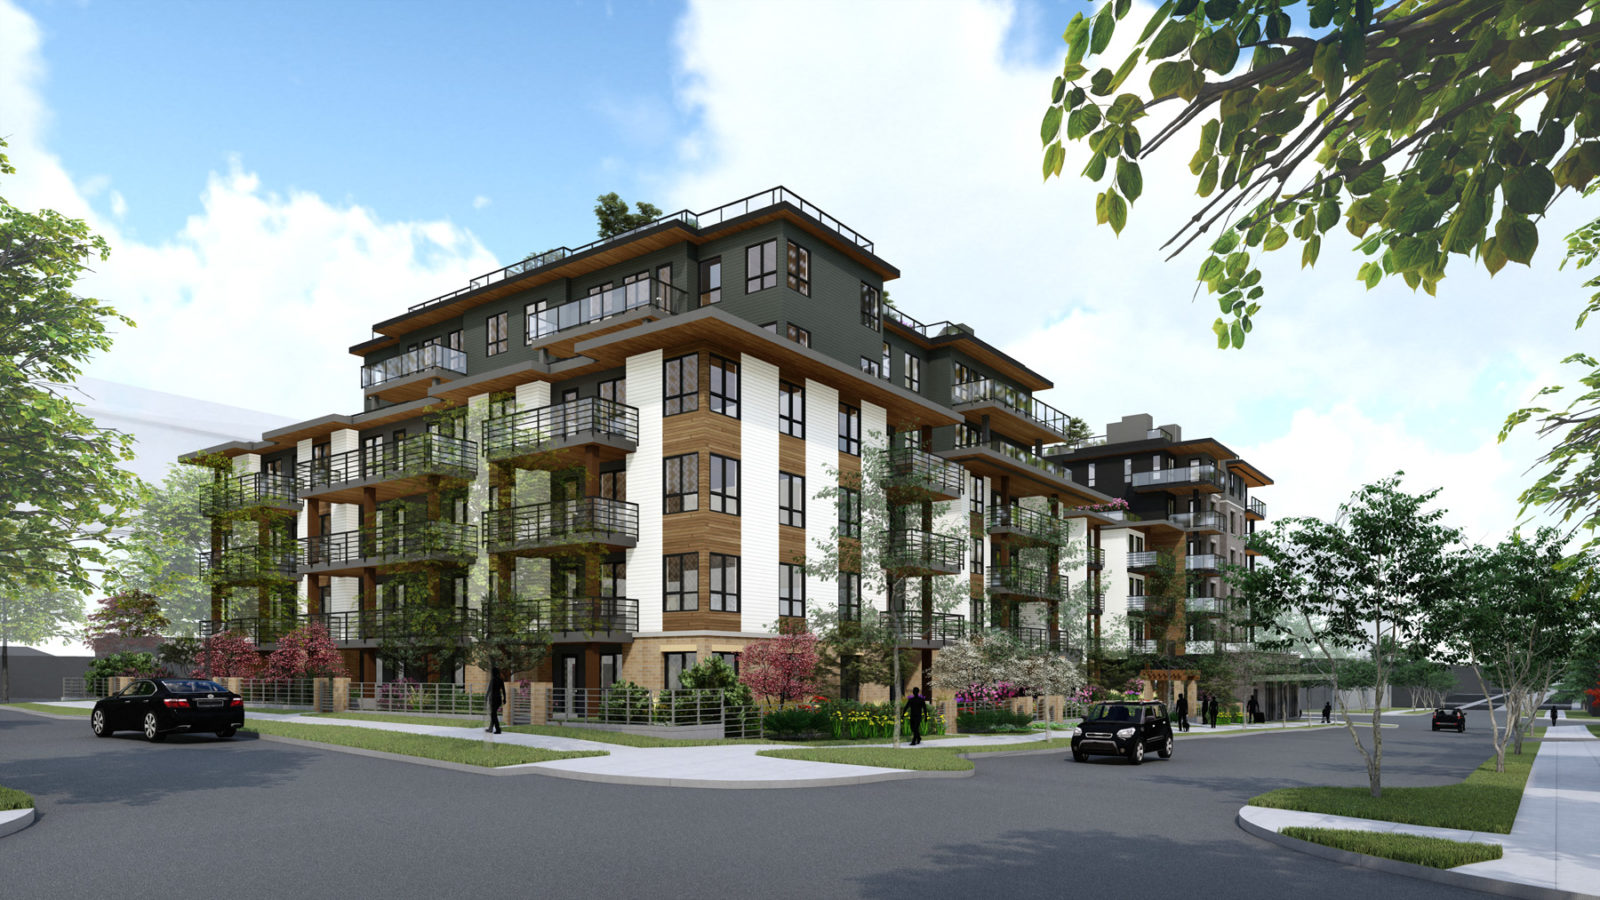 A new East Vancouver condominium development of 122 studio to 3-bedroom homes.